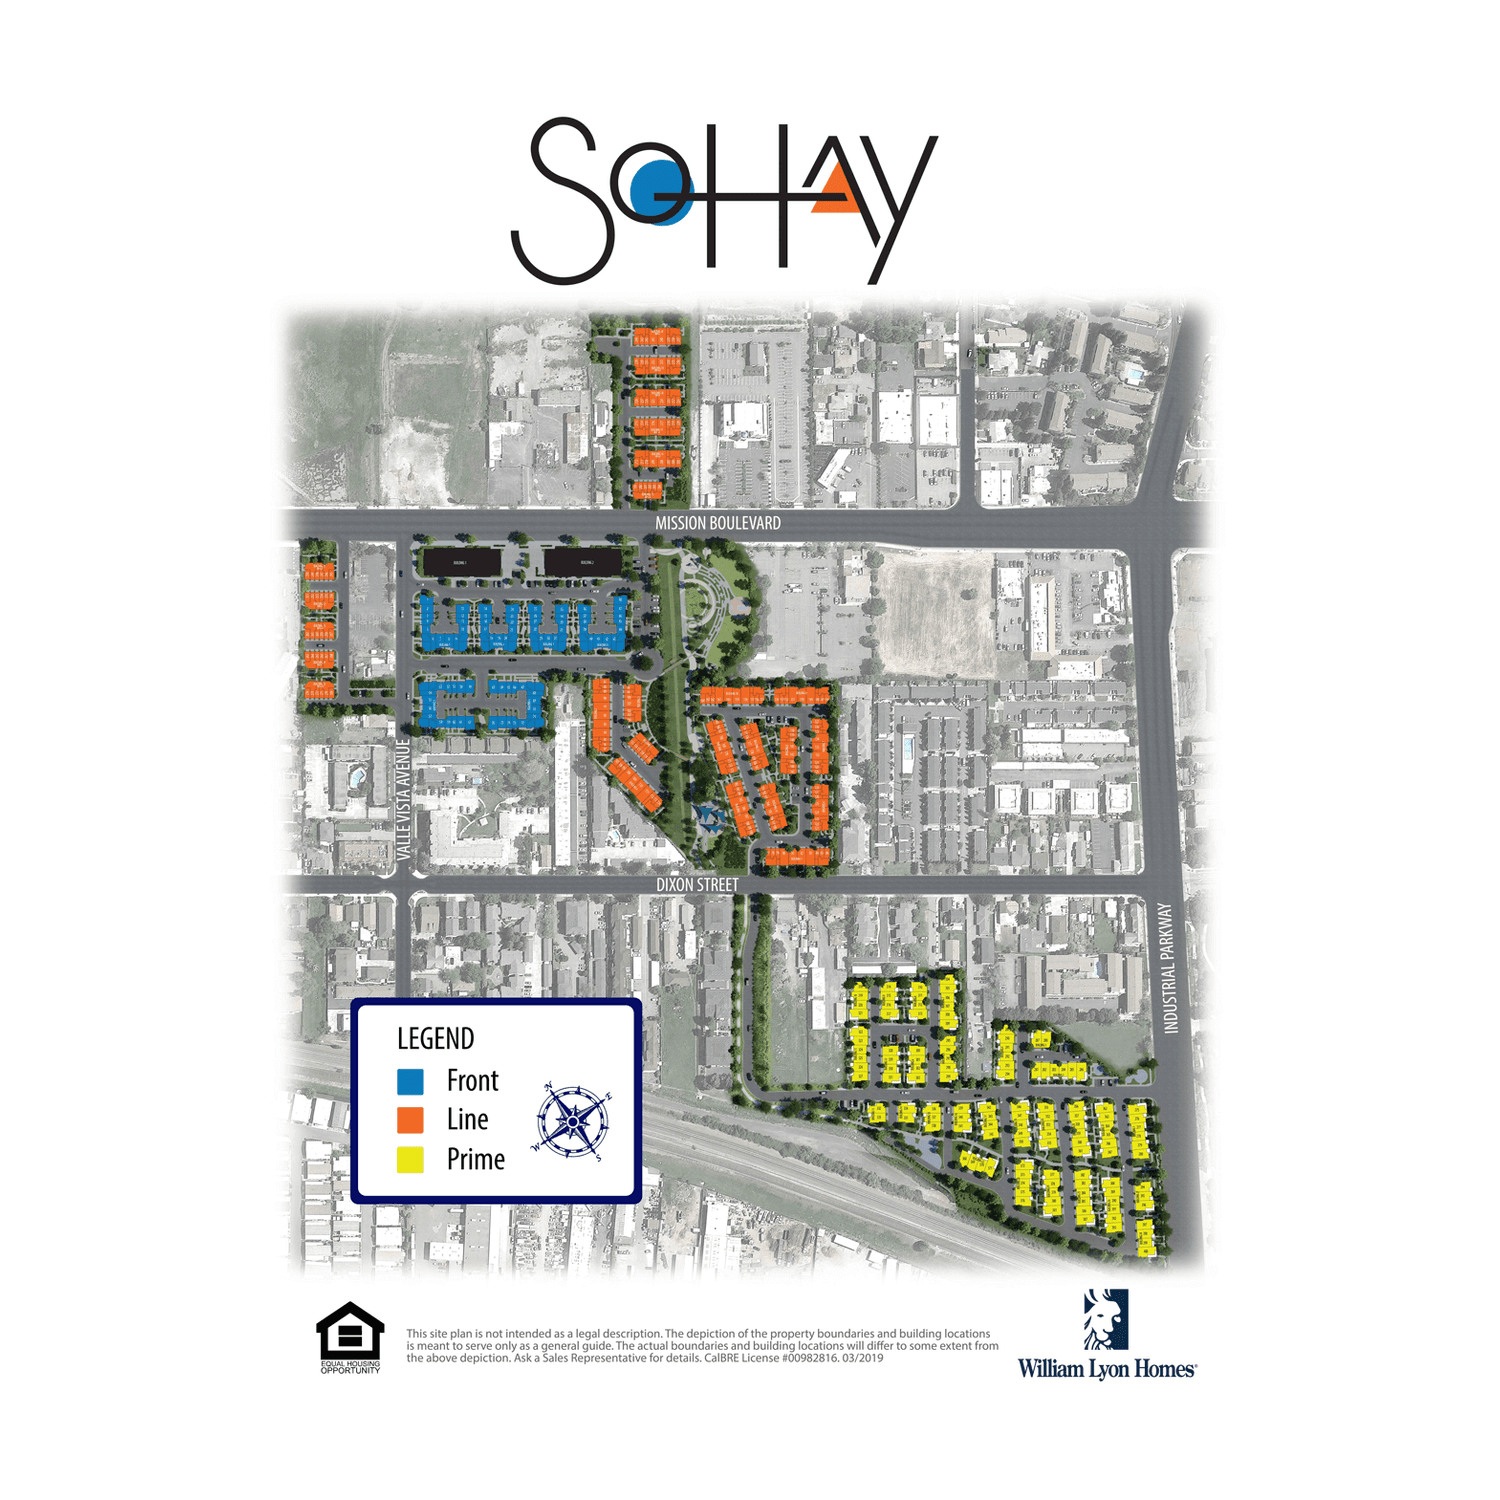 2. SoHay Prime building at 132 Nexa Court, Hayward, CA 94544